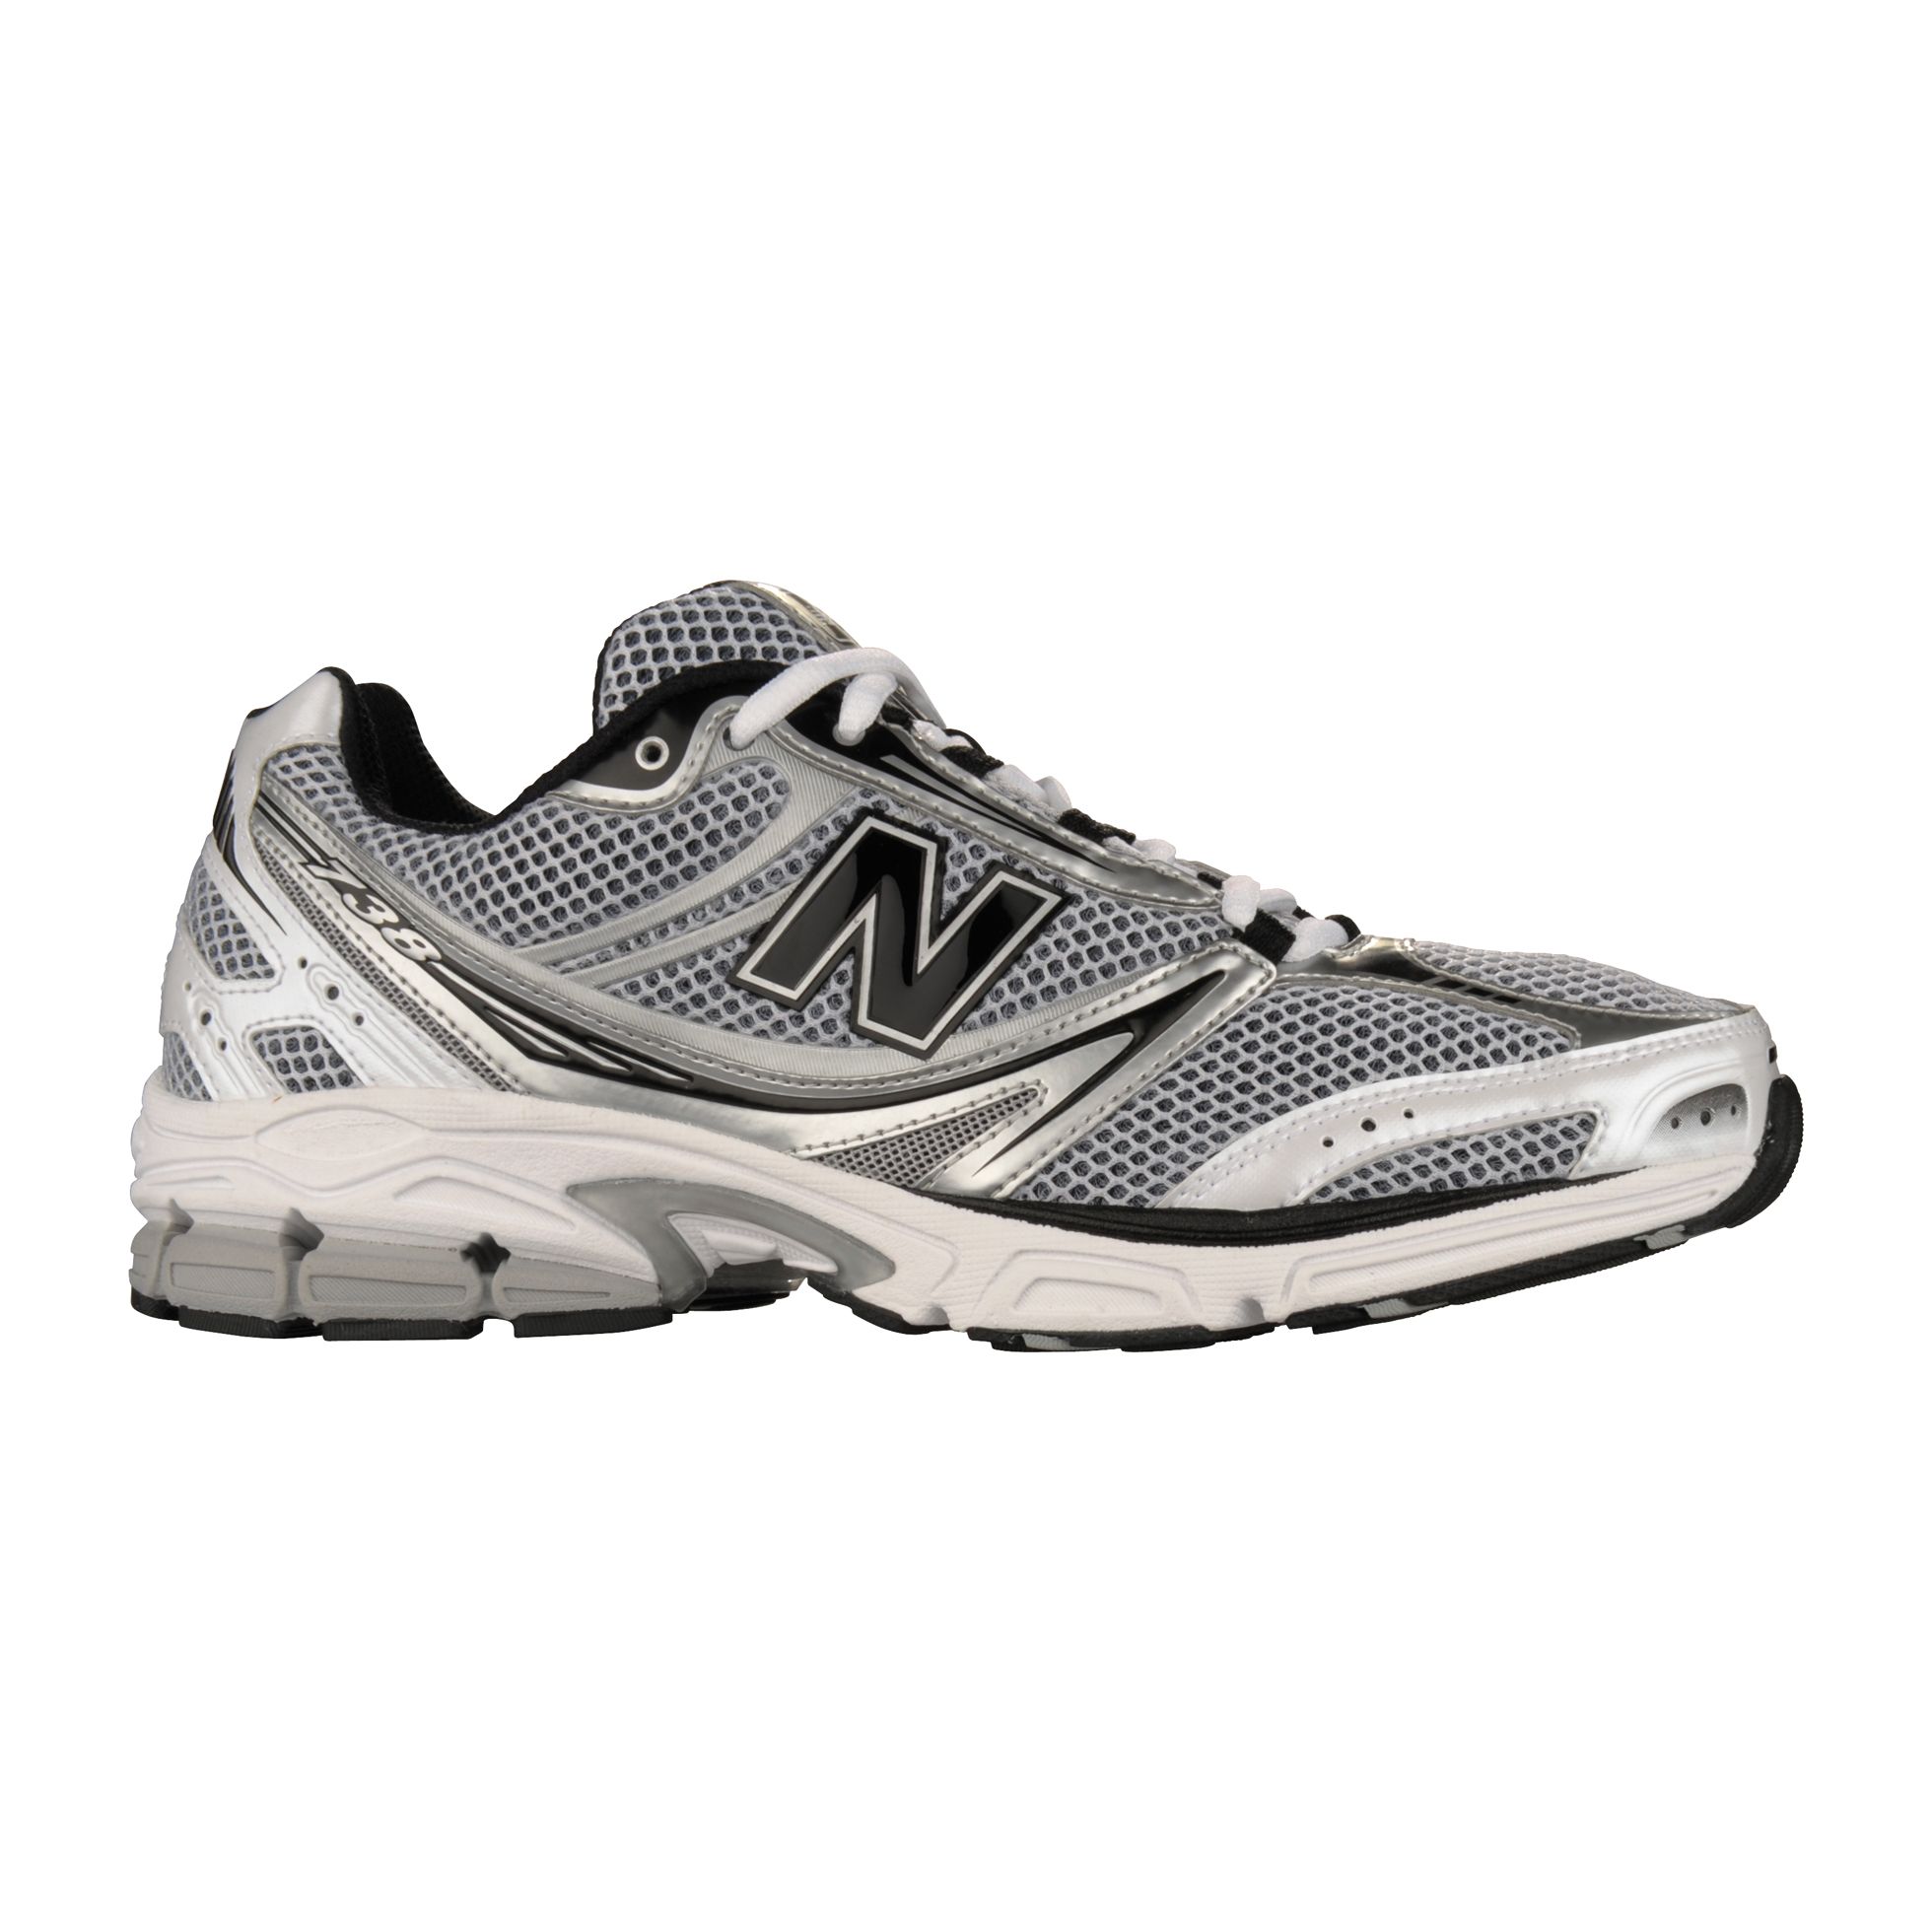 New Balance 738 Shoe - White - Clothing, Shoes \u0026 Jewelry - Shoes - Men's  Shoes - Men's Sneakers \u0026 Athletic Shoes